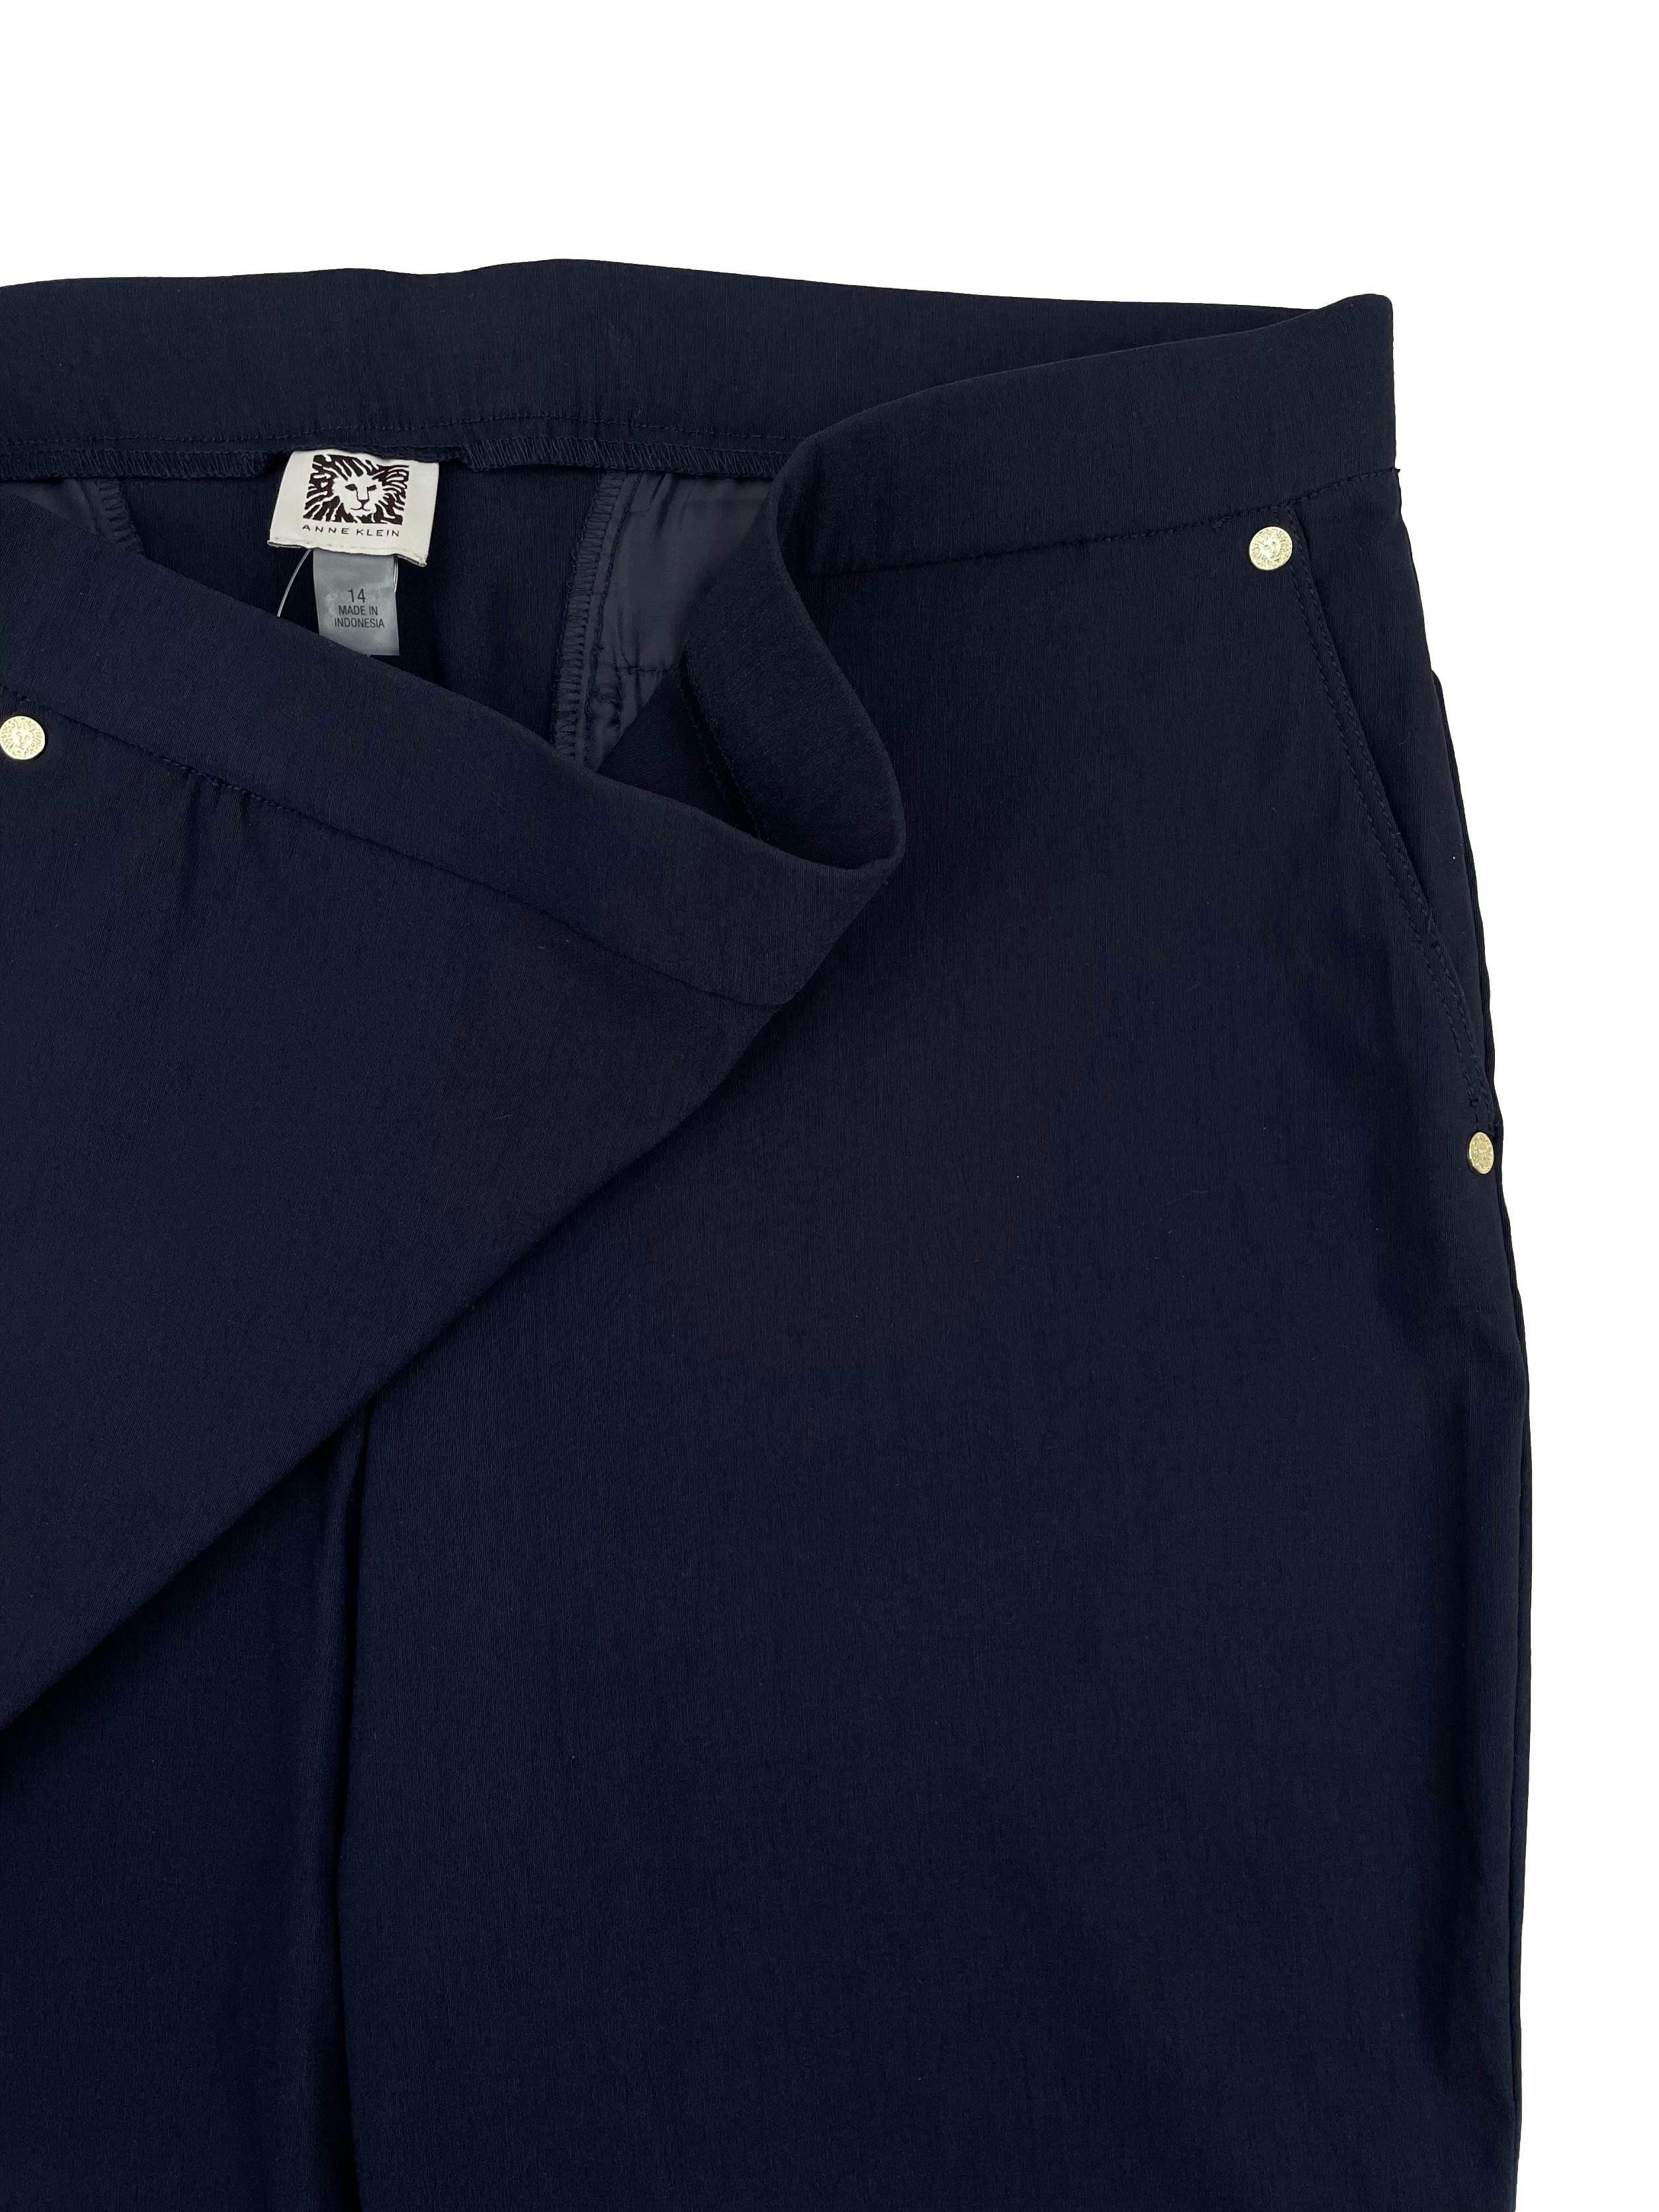 Pantalón Anne Klein azul stretch con bolsillos laterales y plaquitas doradas, corte slim. Cintura 88cm Tiro delantero 28cm Largo 100cm